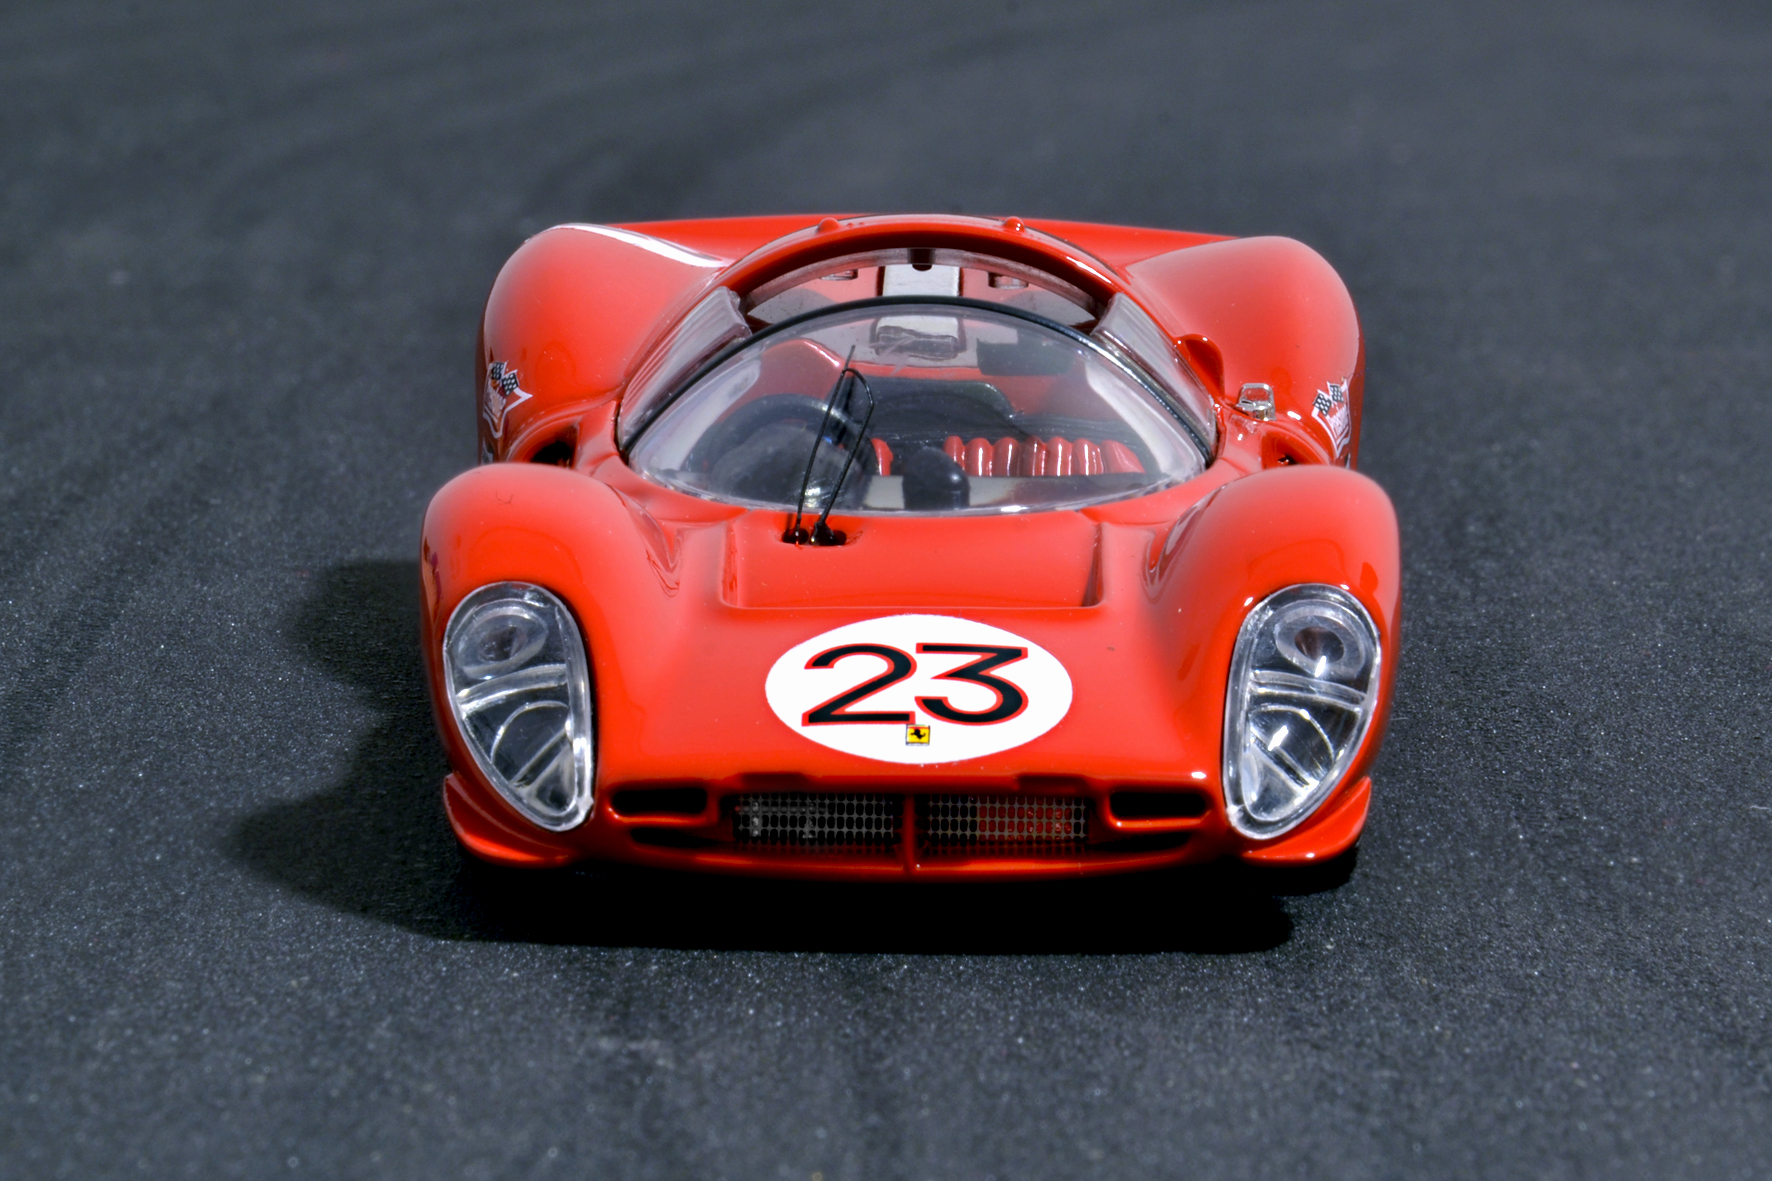 Ferrari 330 P4 Spyder<br />Lorenzo Bandini & Chris Amon 1967 - Bang 1:43